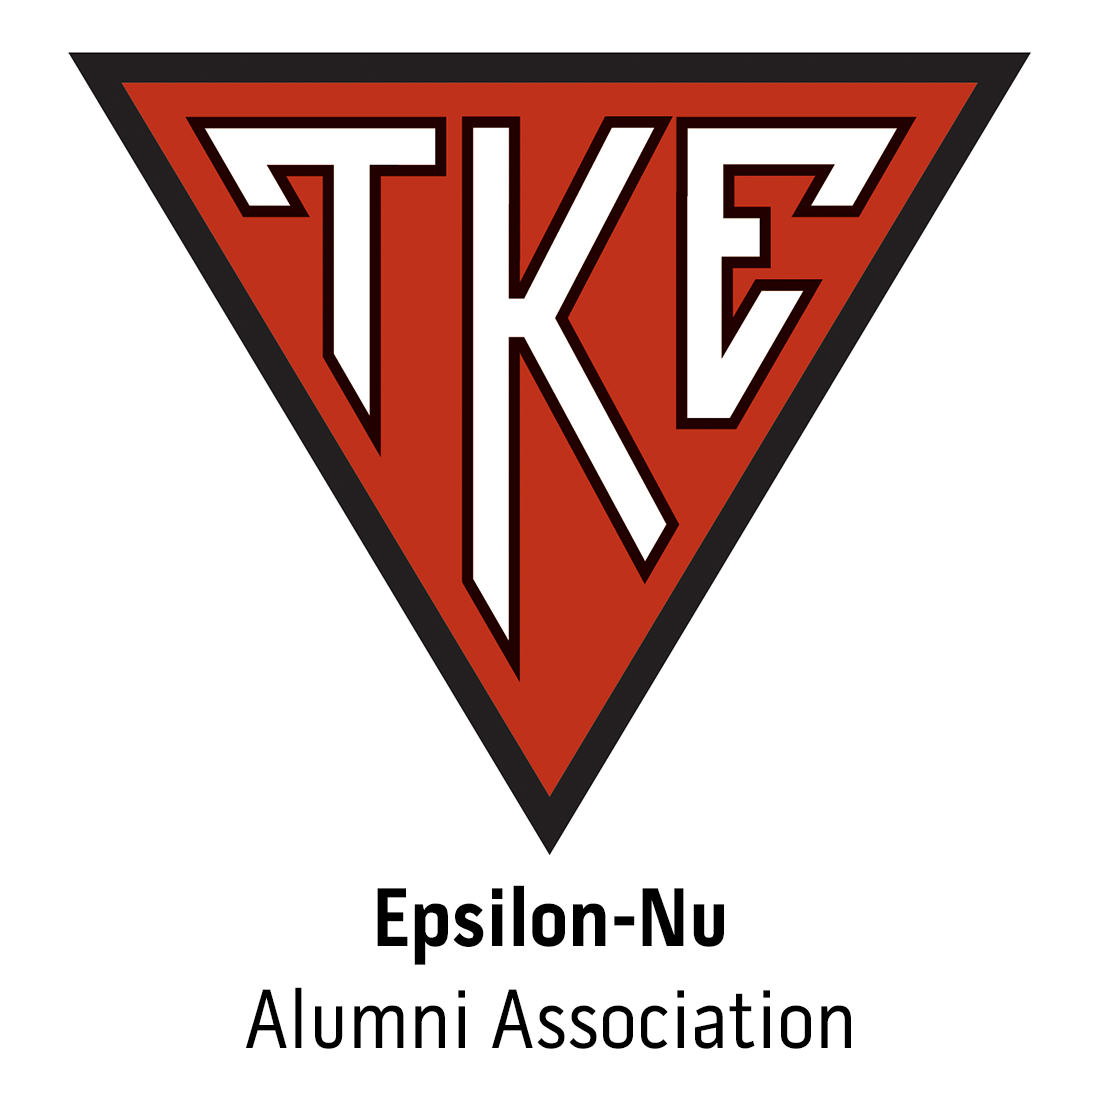 Epsilon-Nu Alumni Association at Univ of Wisconsin-Stevens Point